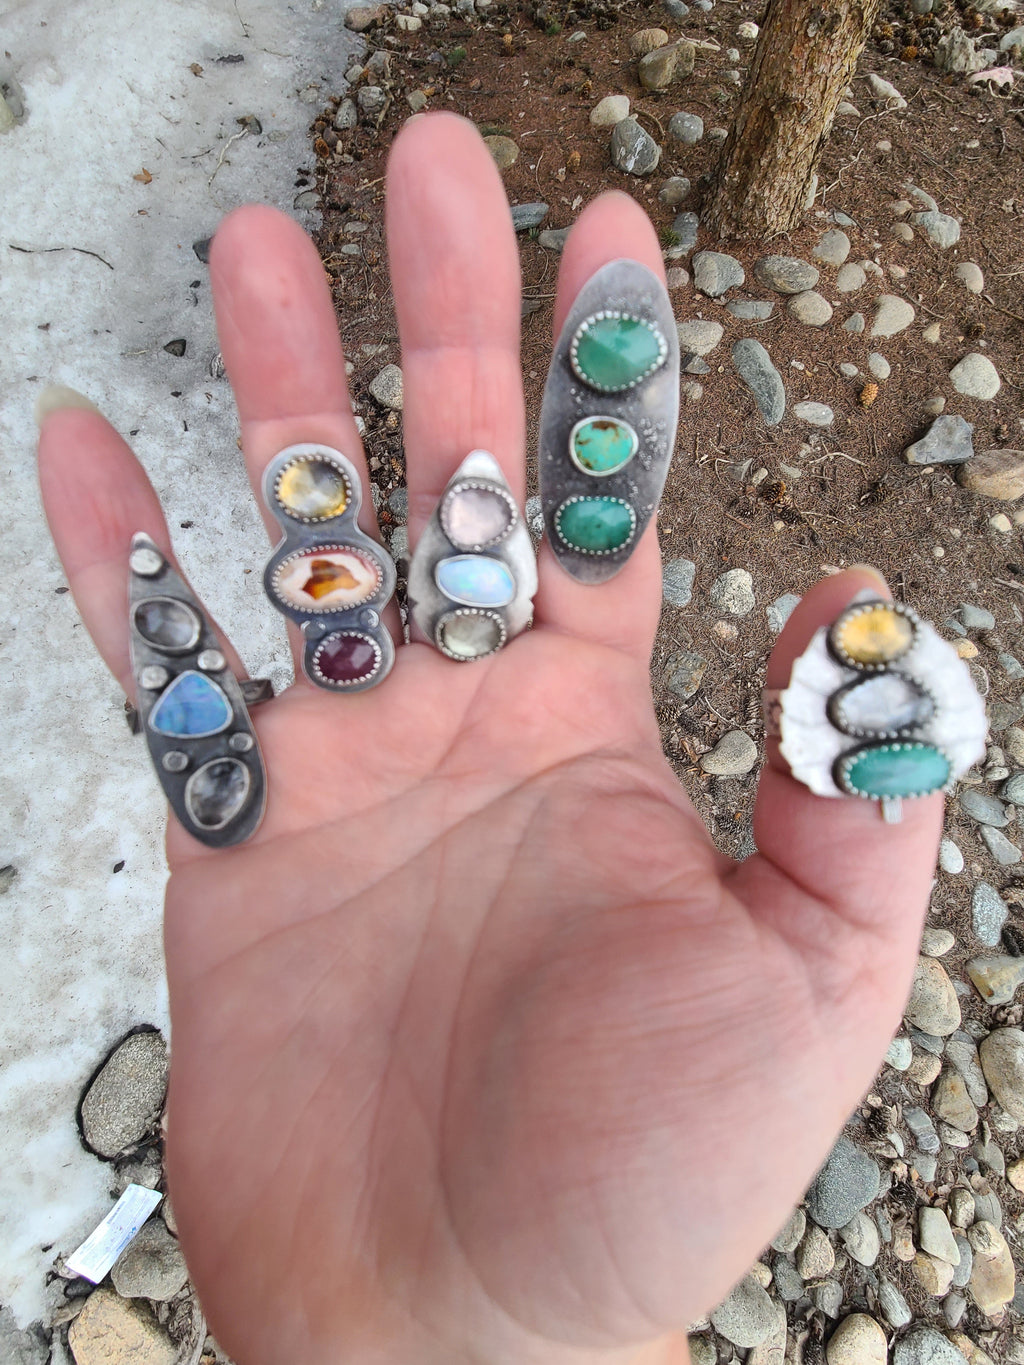 Pebbles - Alpine Lily Jewelry & Designs